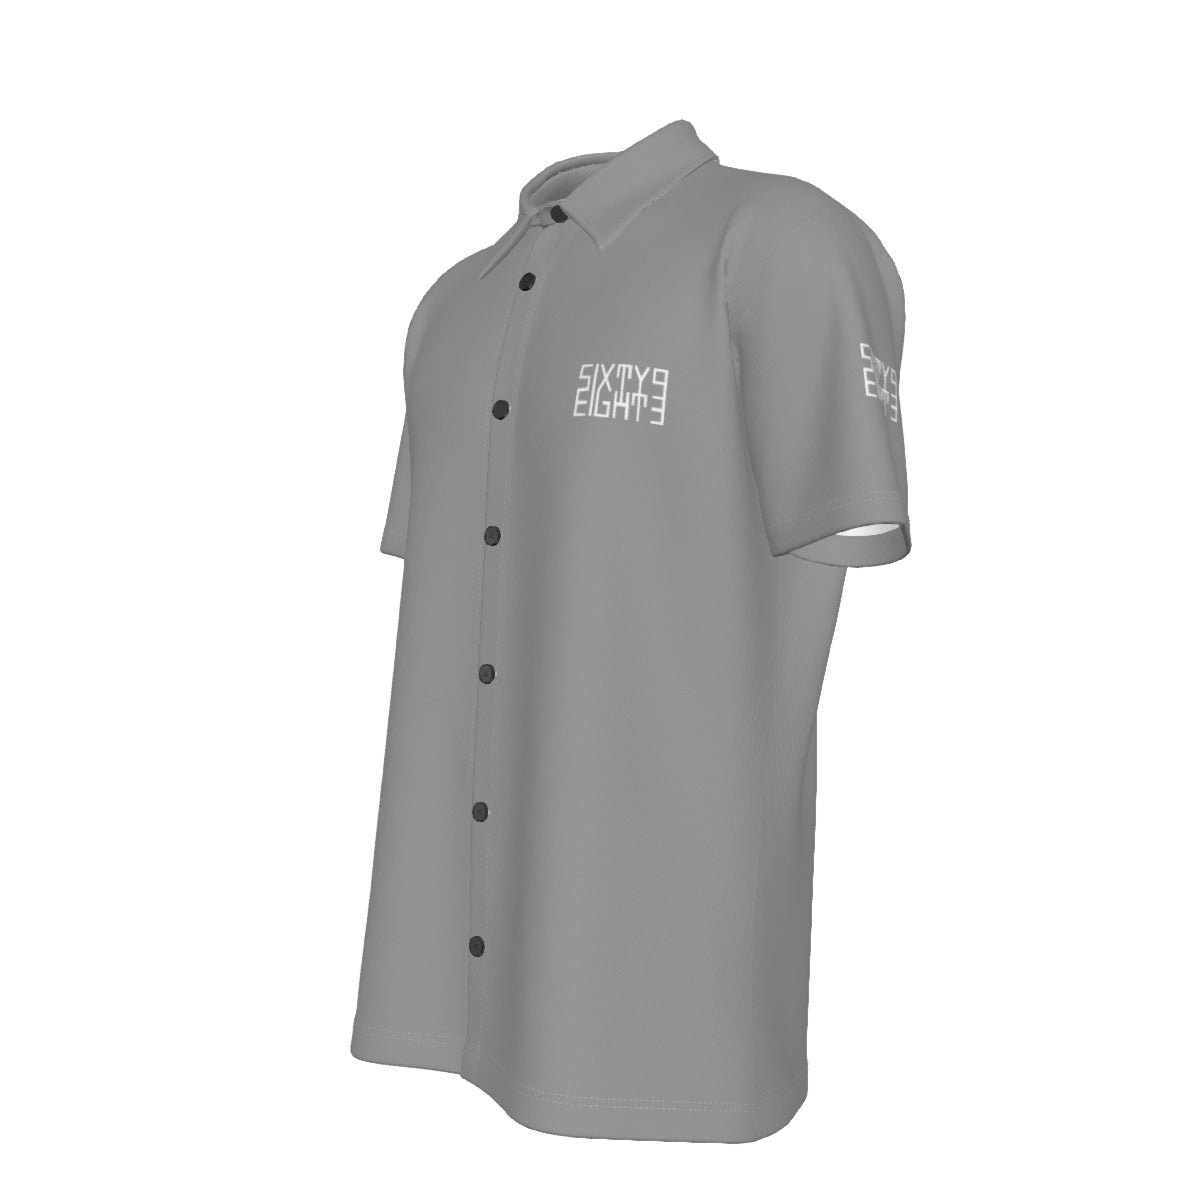 Sixty Eight 93 Logo White Grey Men's Button Up Shirt